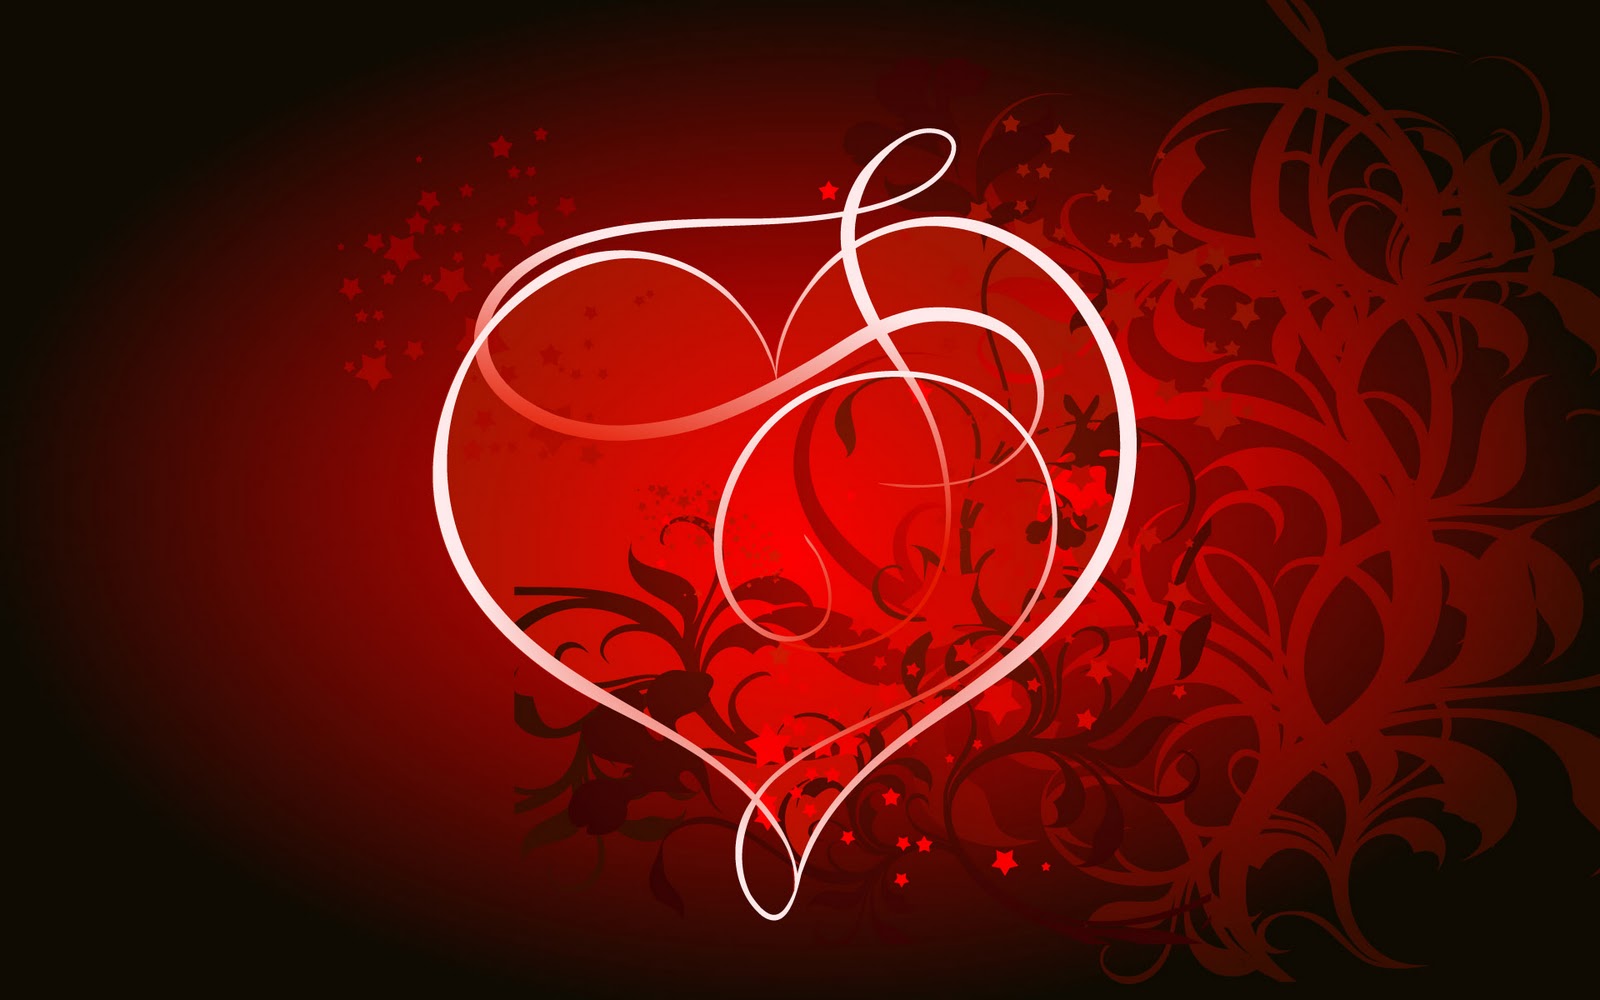 Card E Cards Top Valentine S Day Desktop Wallpaper For